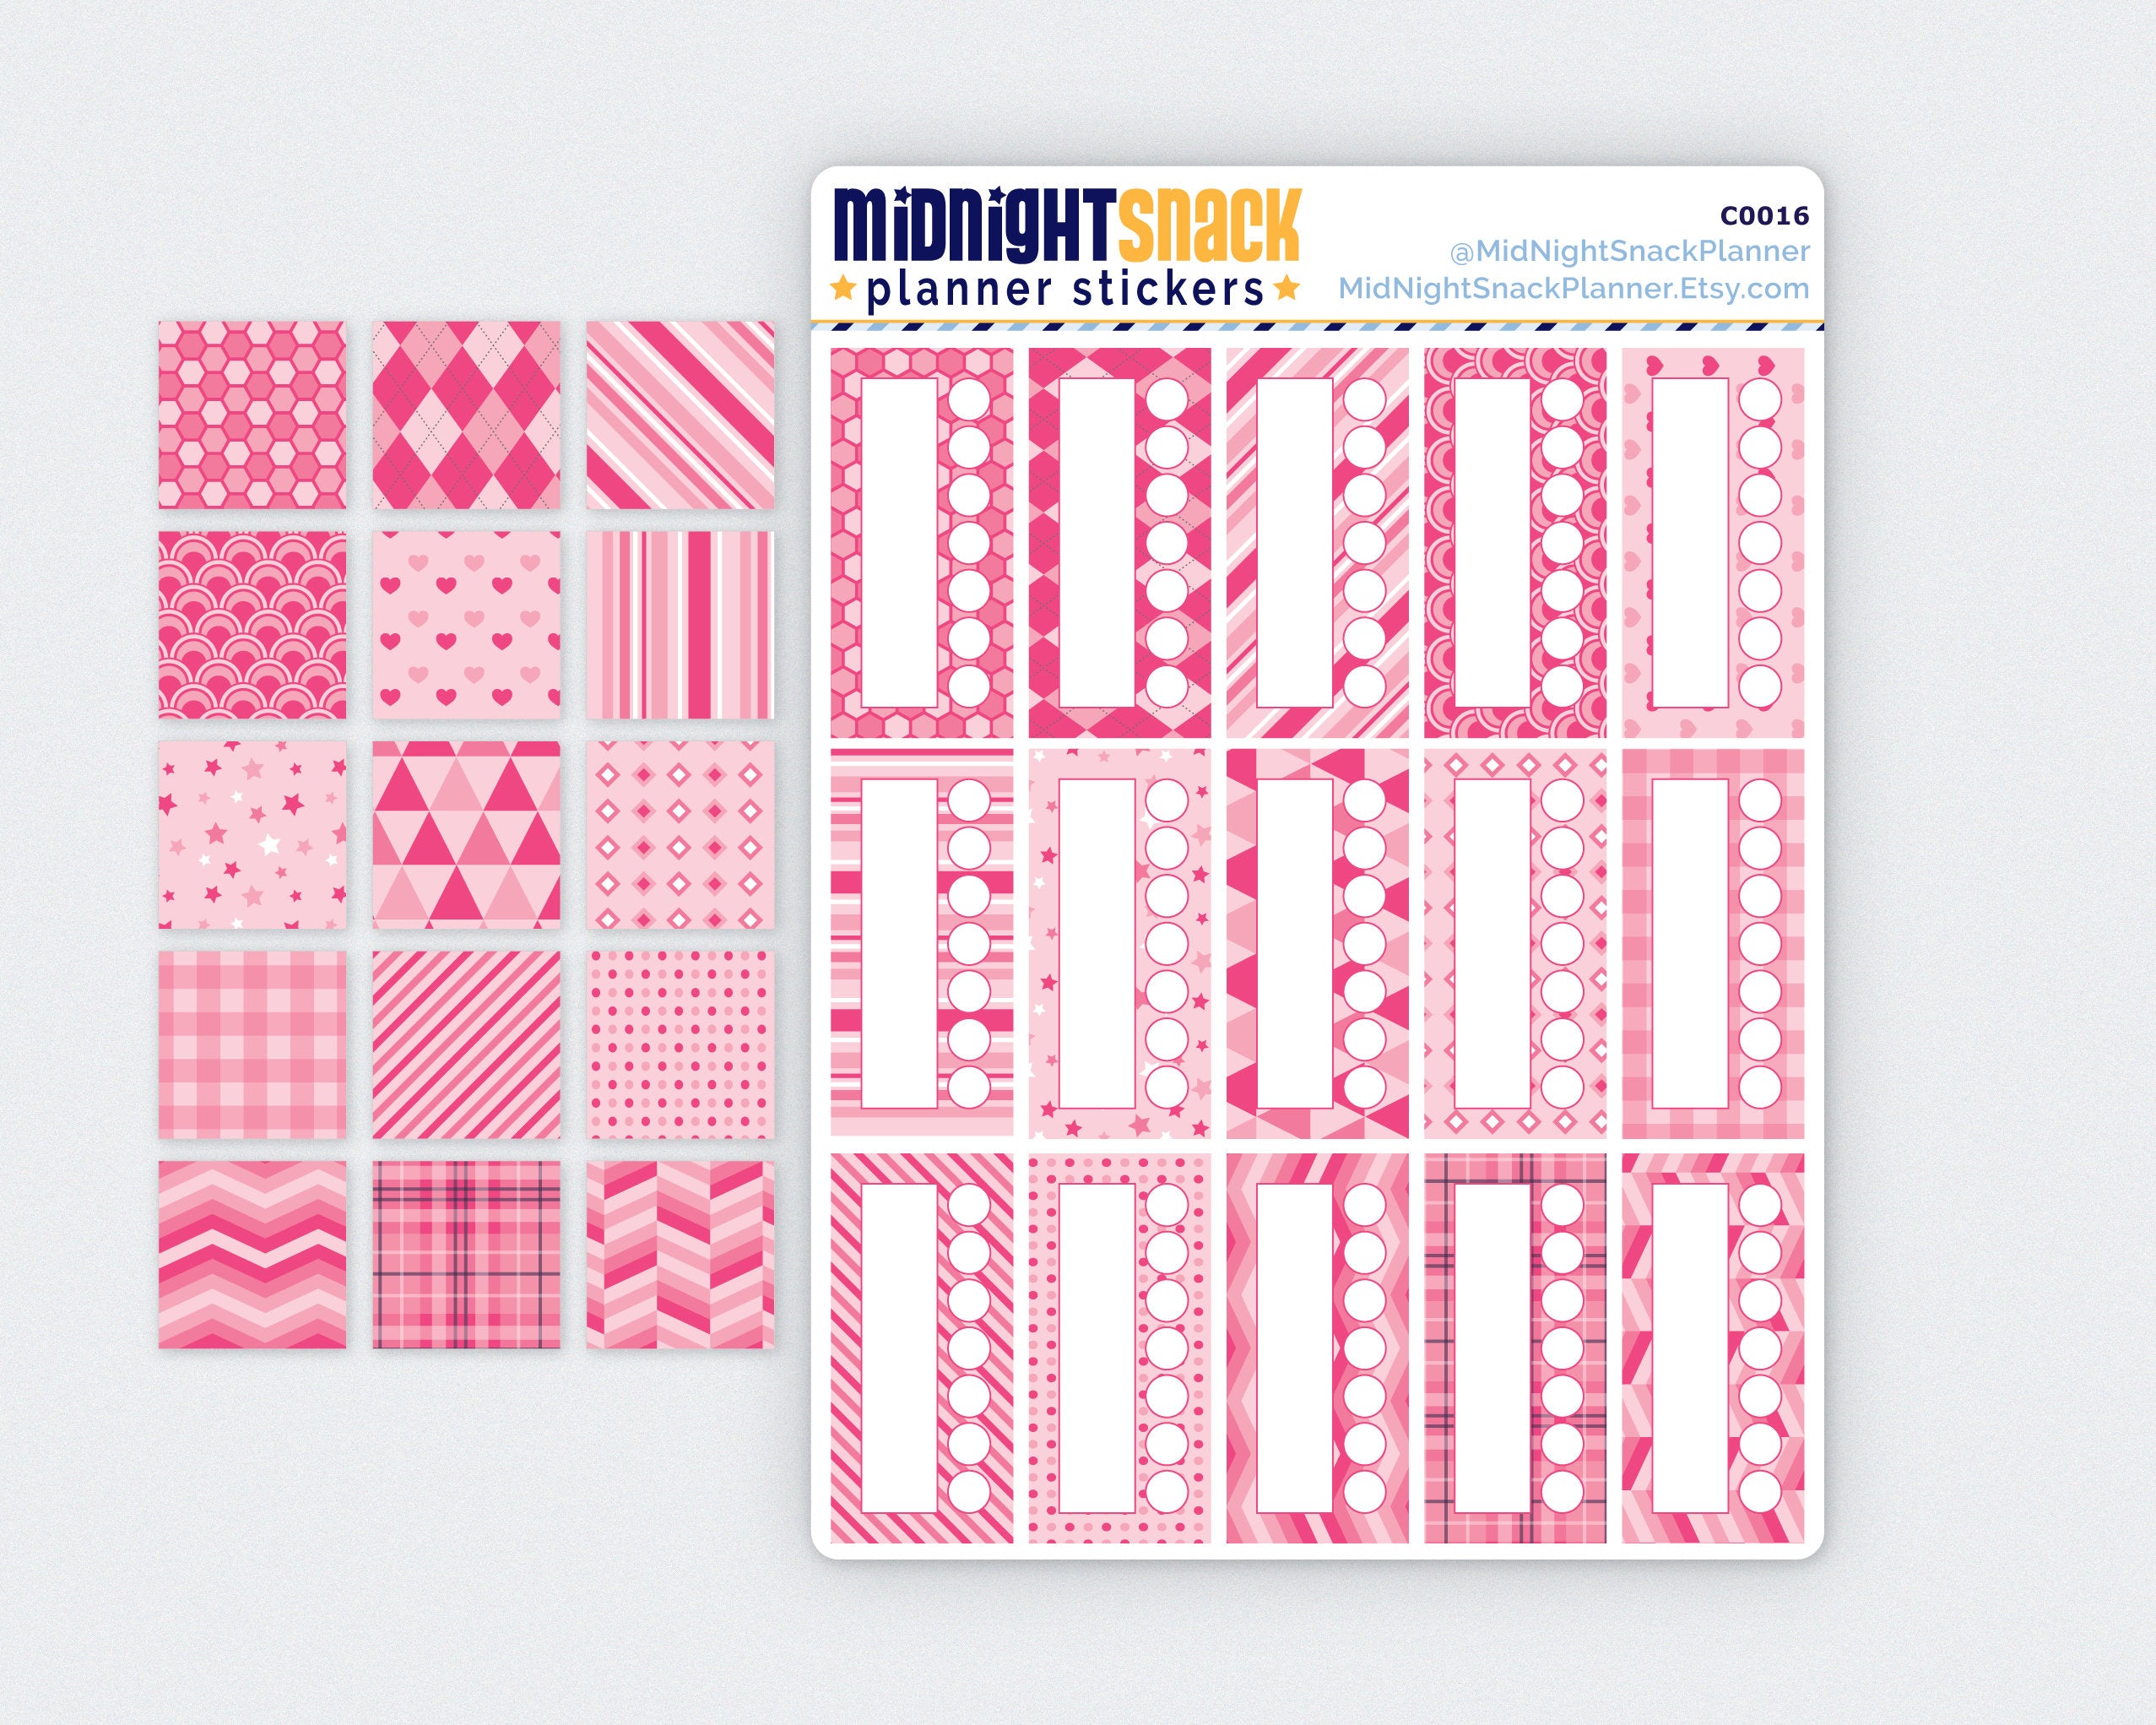 Pink Patterned Habit Tracker Planner Stickers Midnight Snack Planner